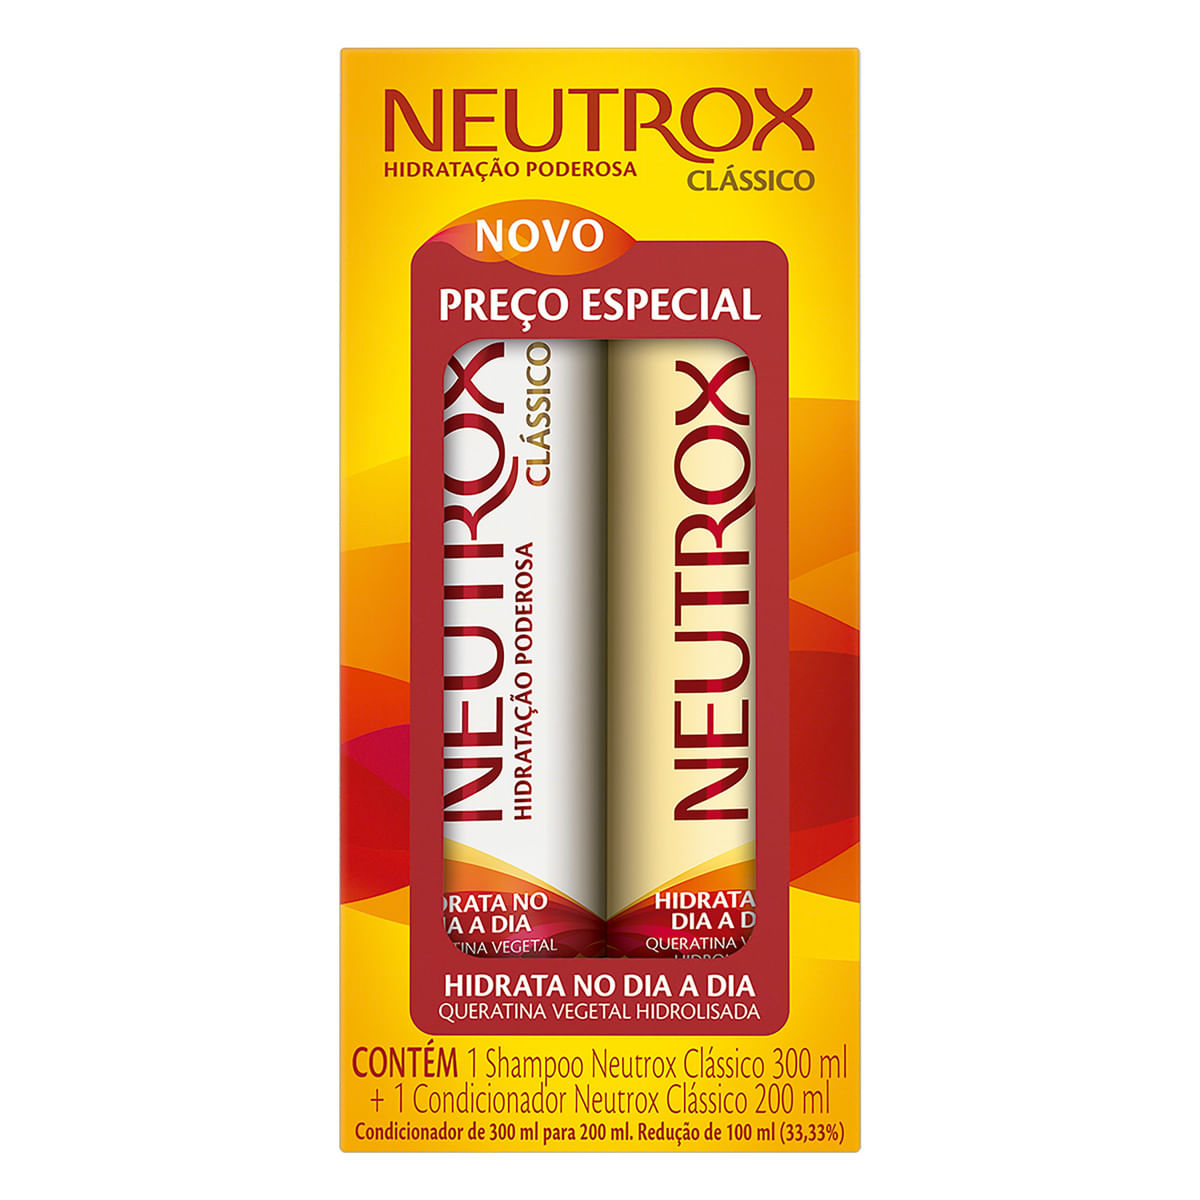 Neutrox Kit Classico Hidrata No Dia A Dia Shampoo 300ml + Condicionador 200ml 500 Ml X 1